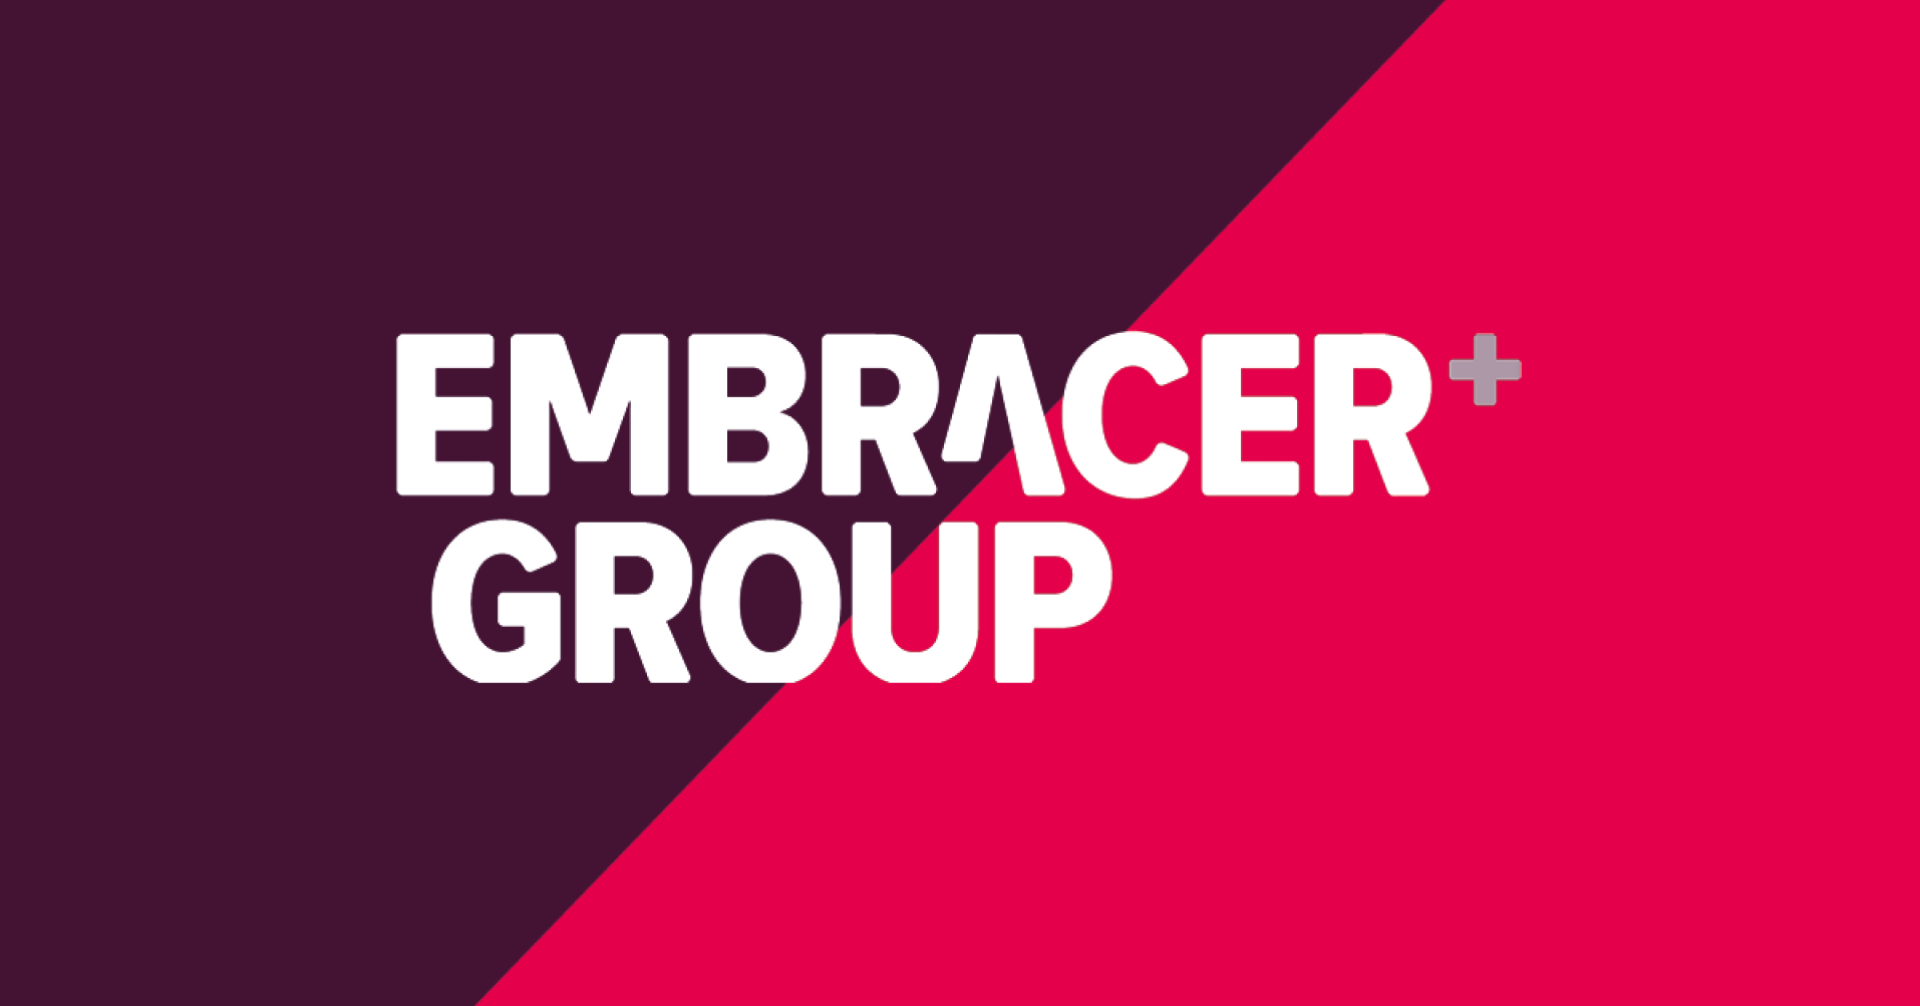 Embracer Group เข้ากวาดบริษัทเกมอีกครั้ง พร้อมตั้ง Embracer Freemode ที่เน้นเกมเรโทร